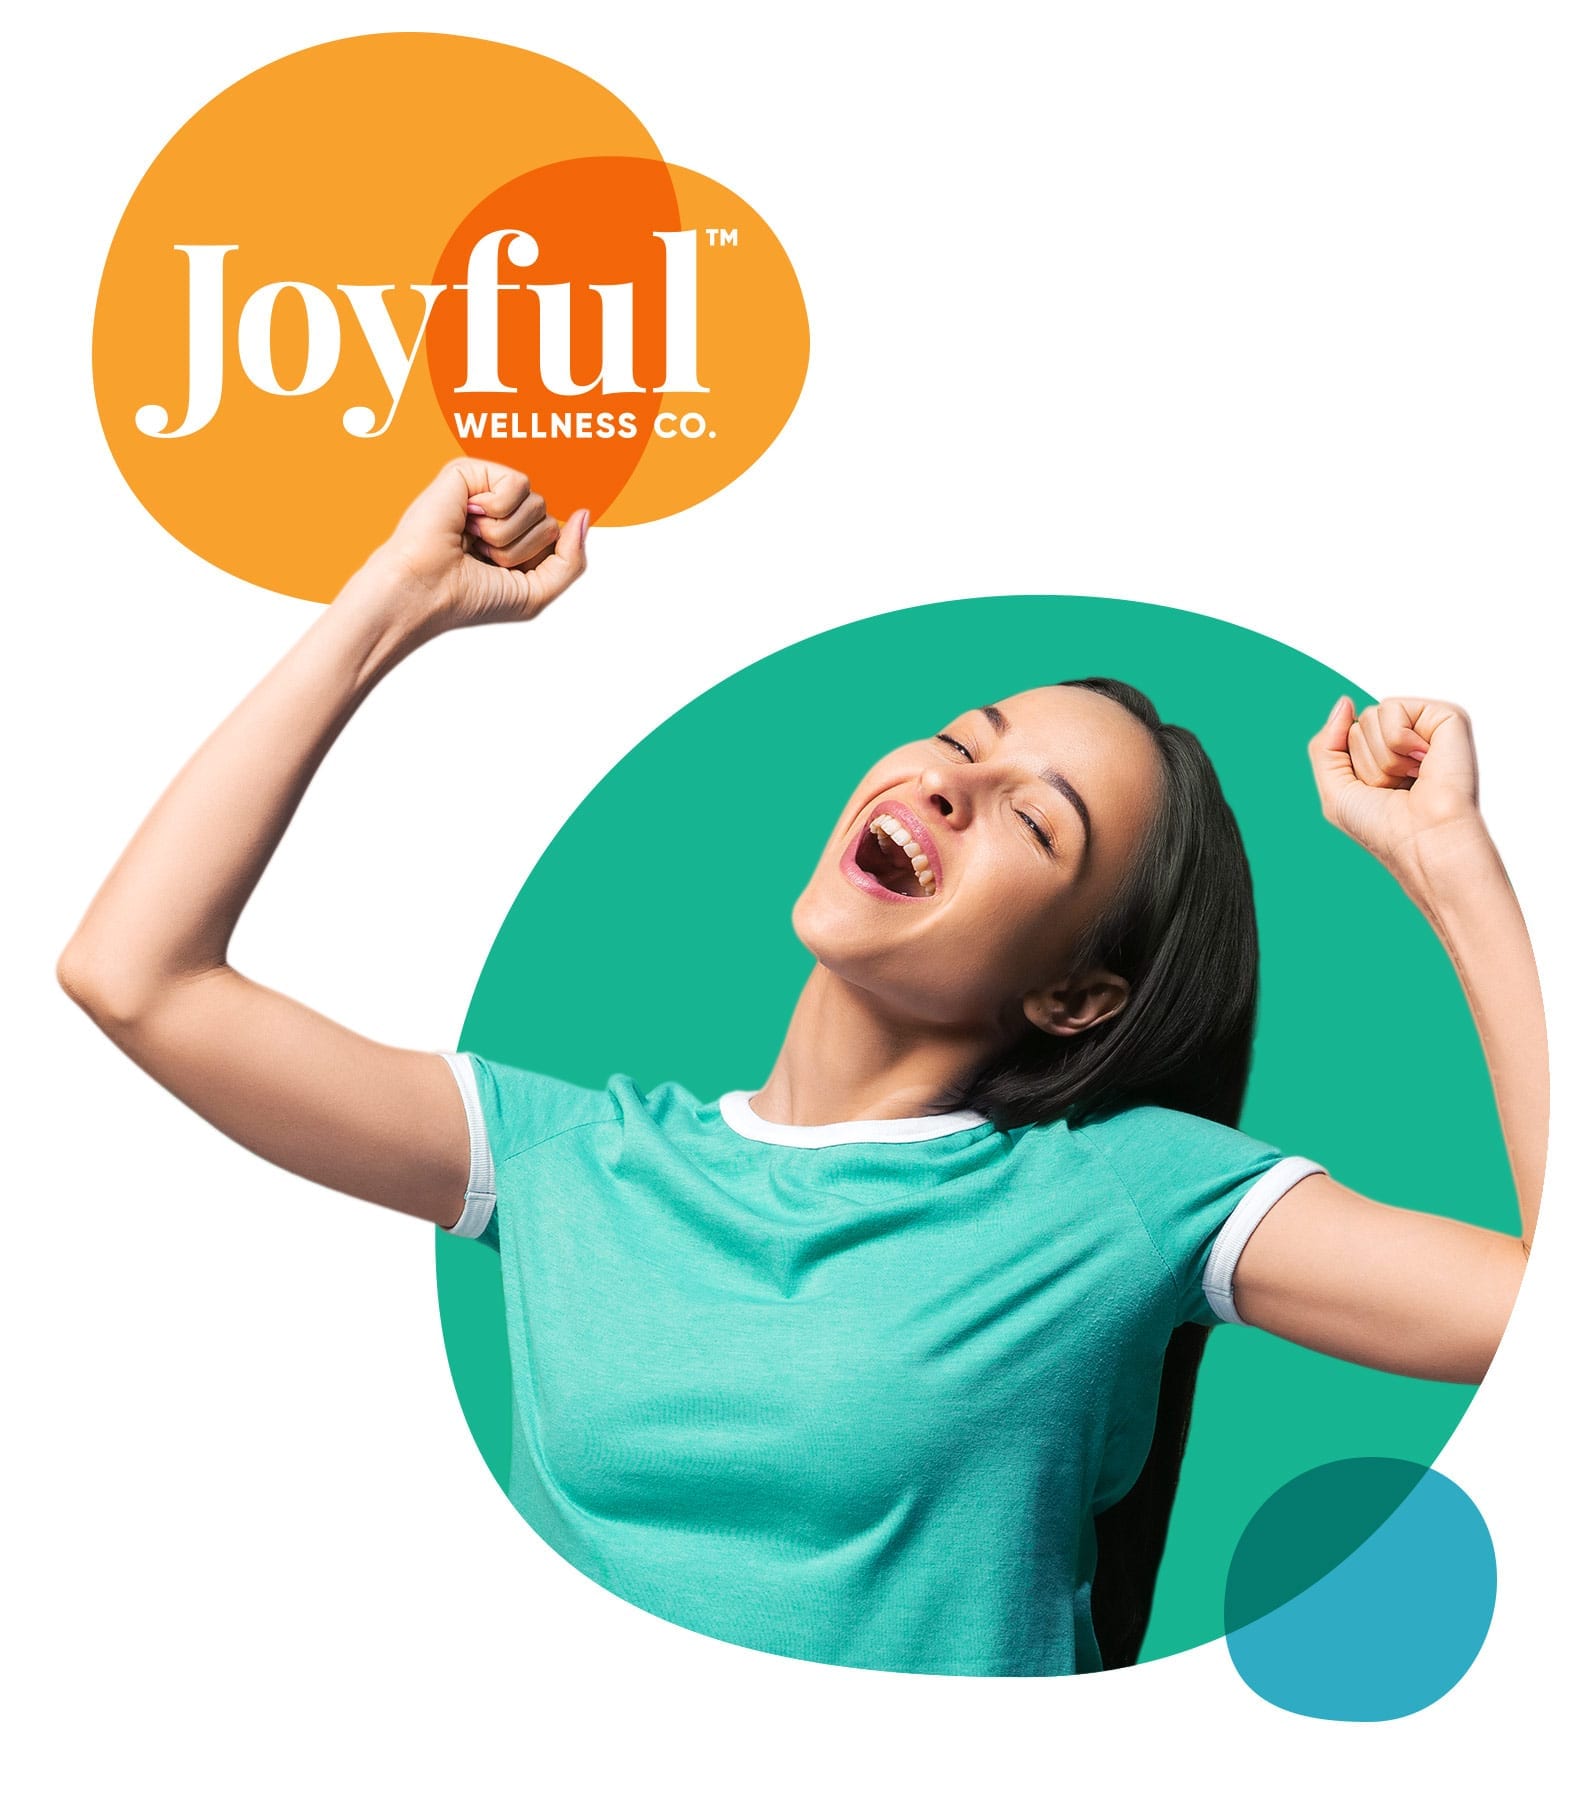 joyful wellness company branding